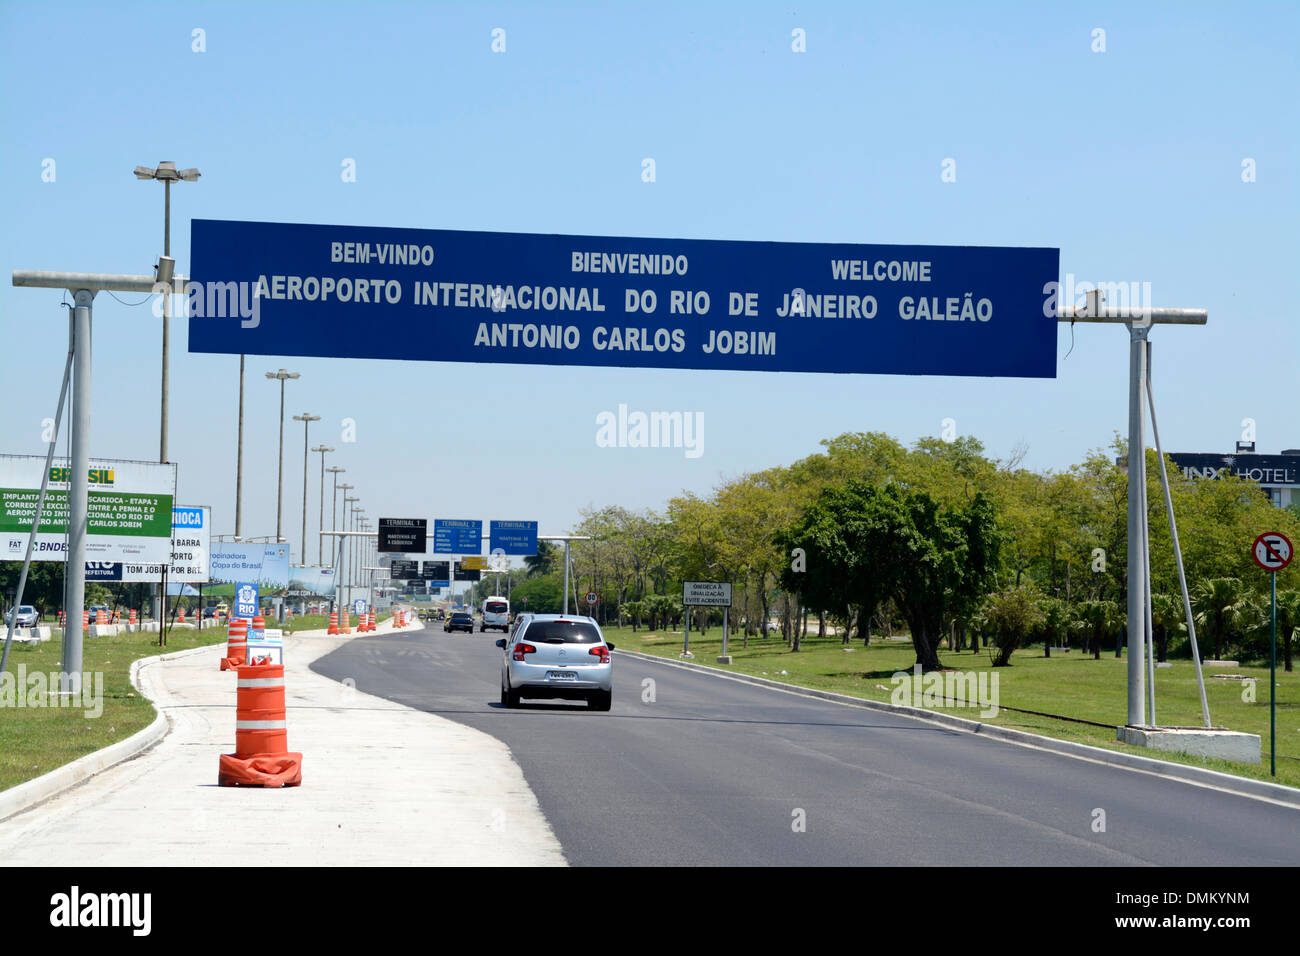 On the main highway to Galeao - Antonio Carlos Jobim International Airport in Rio de Janeiro, Brazil. Stock Photo